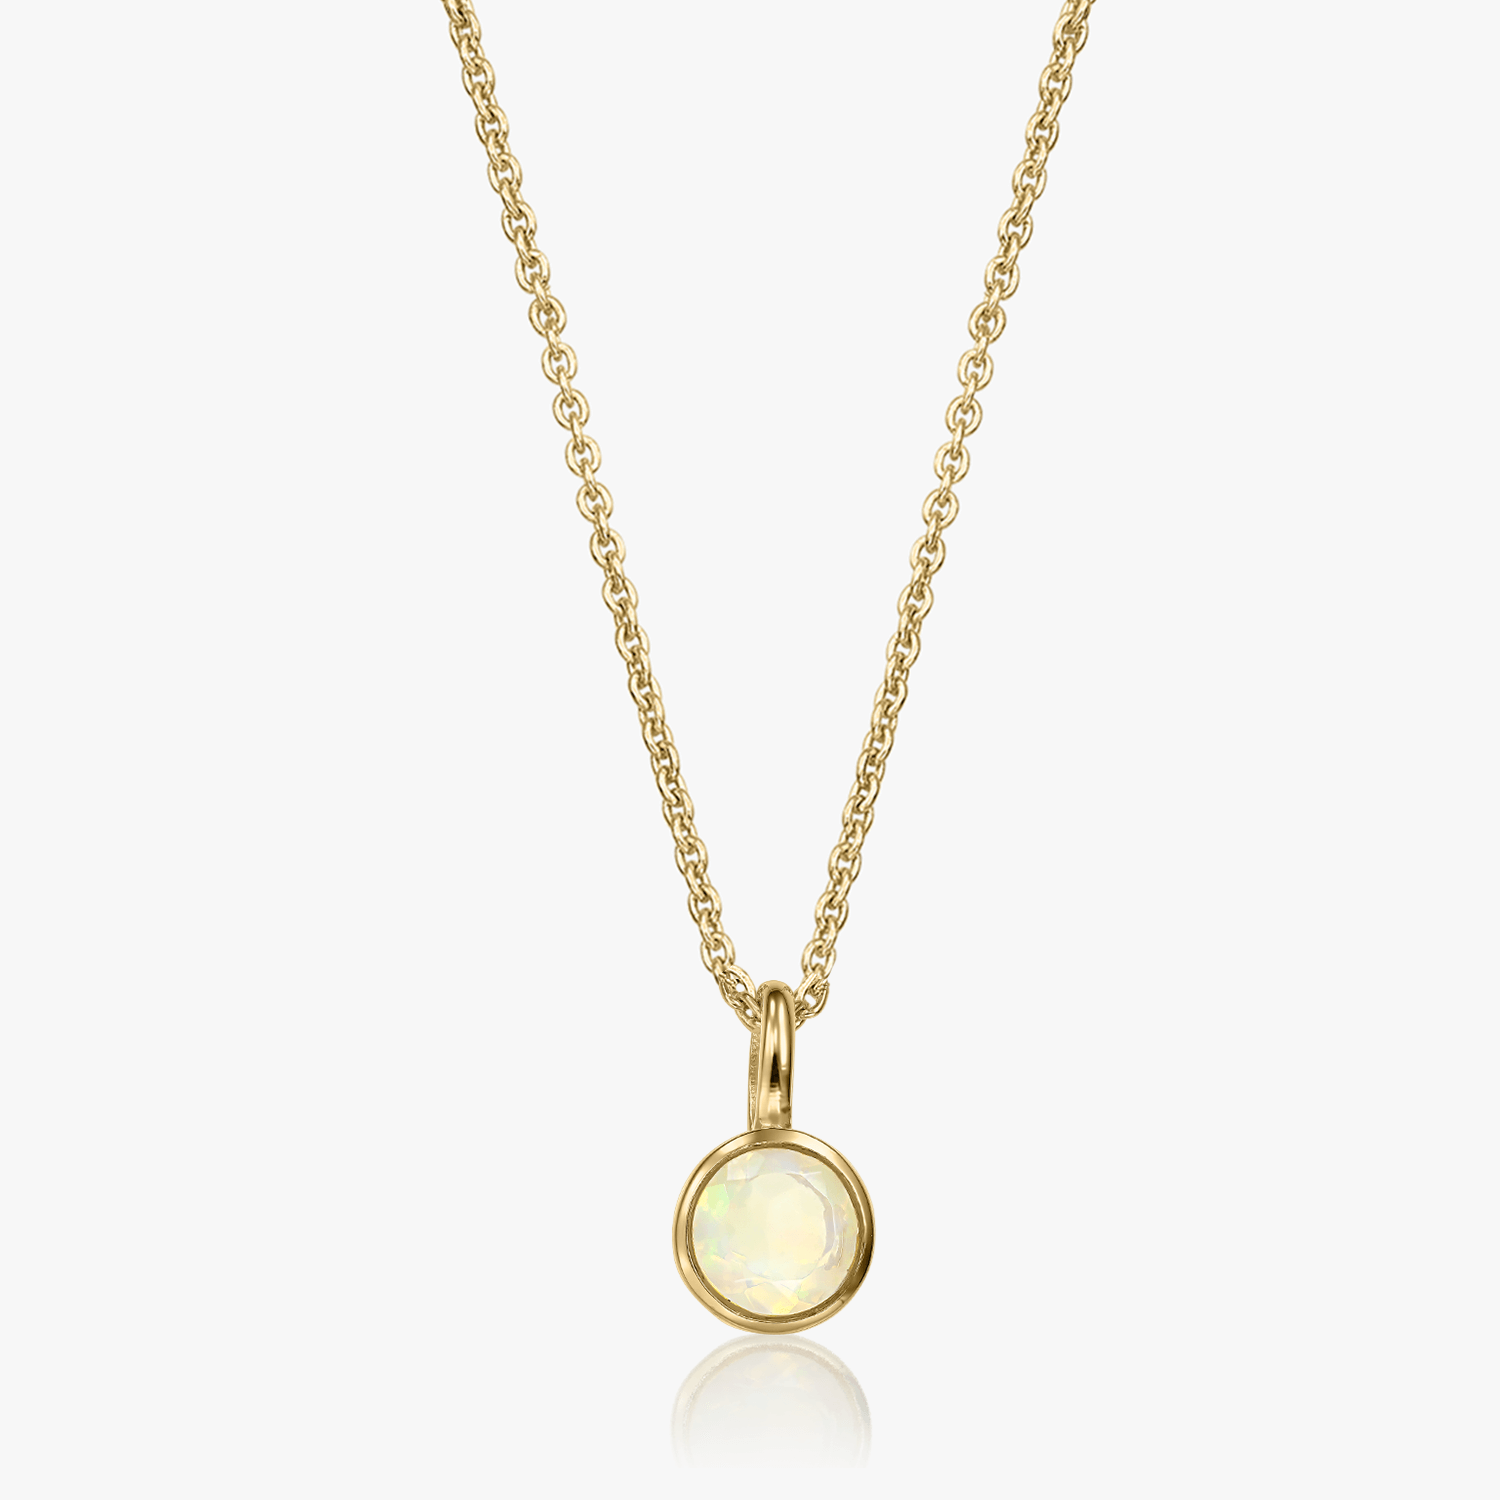 Silver necklace Birthstone Golden October - Opal